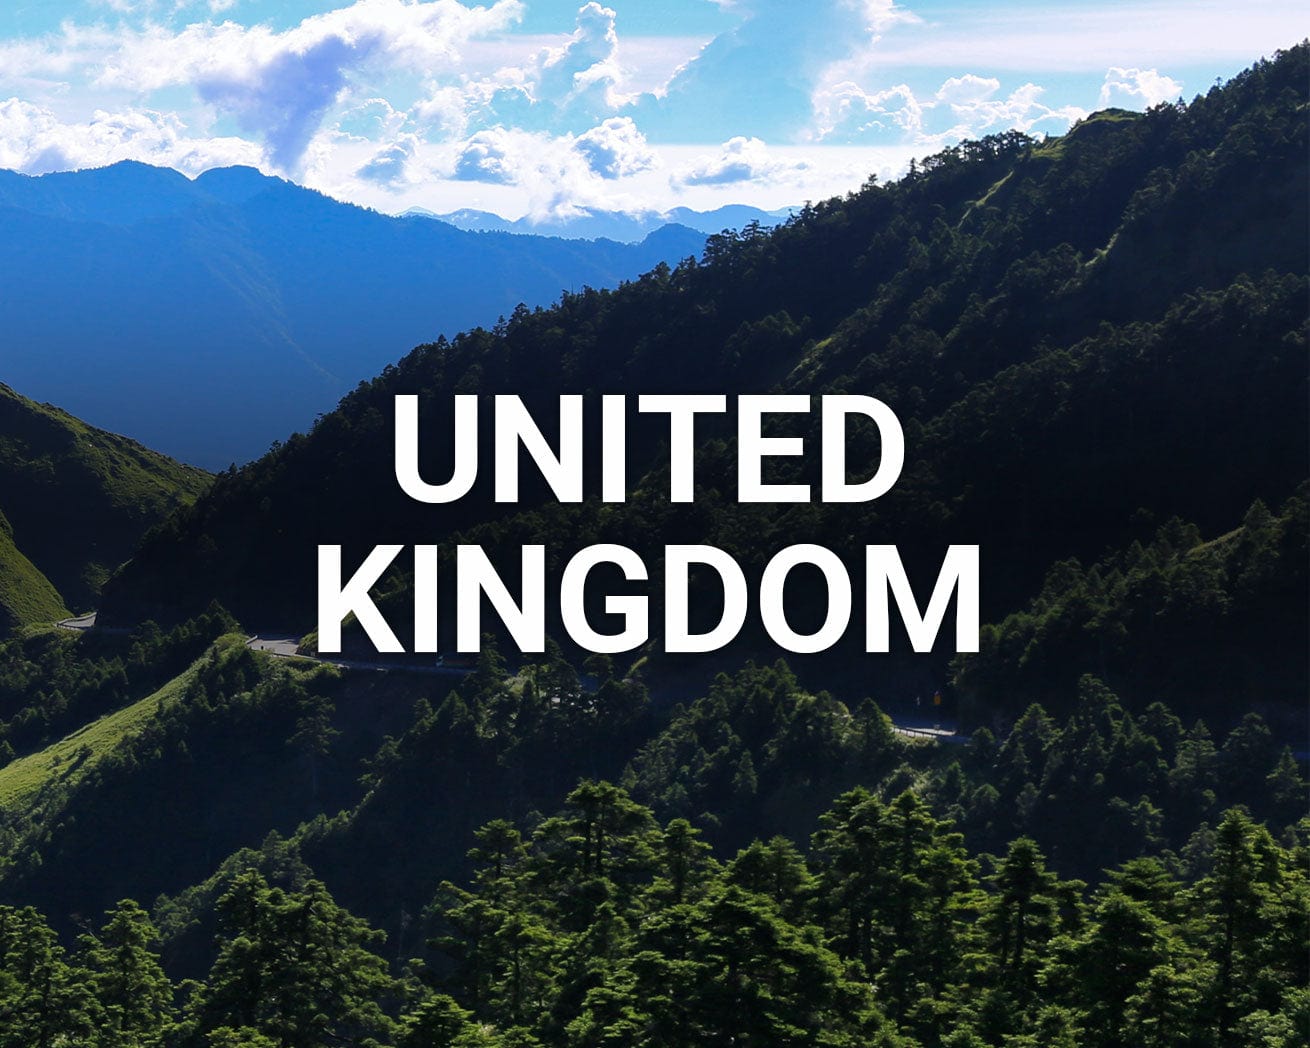 United Kingdom main image